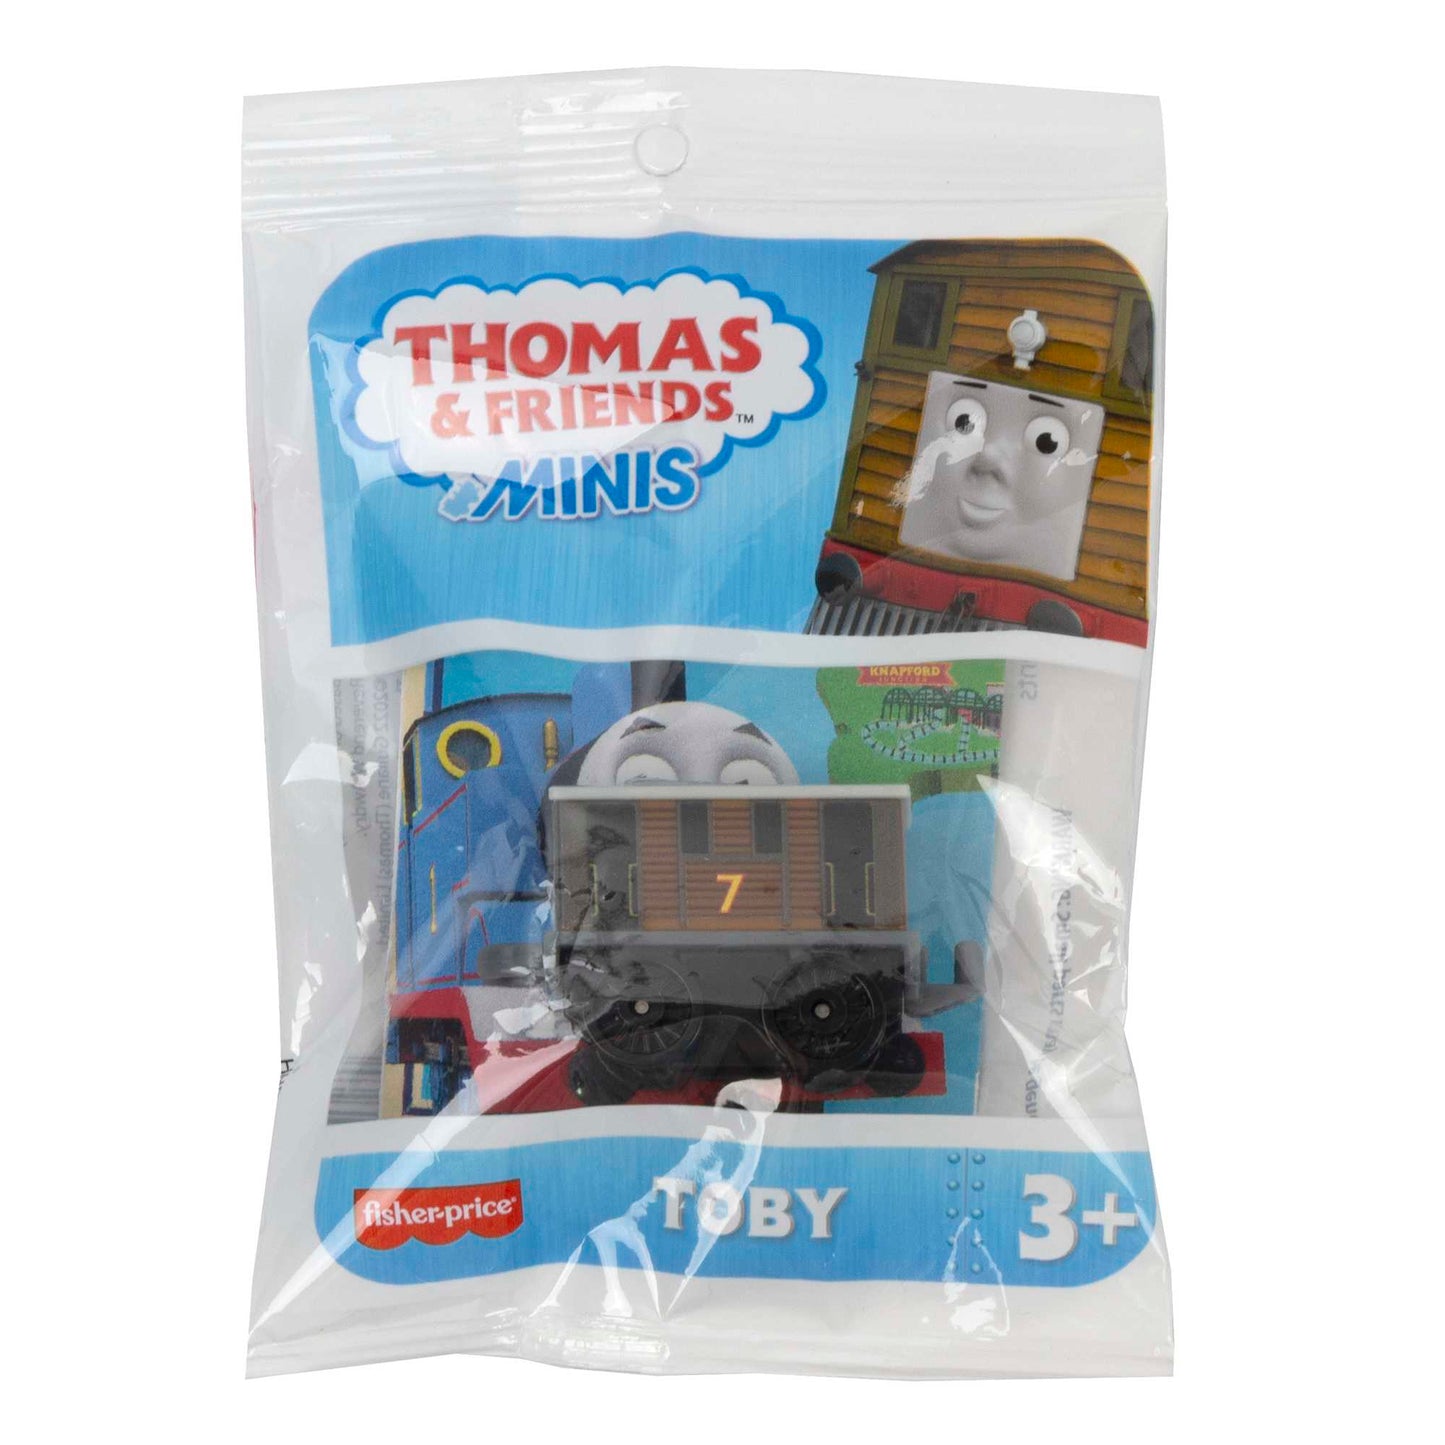 Fisher-Price Thomas & Friends Classic MINI - Assorted*